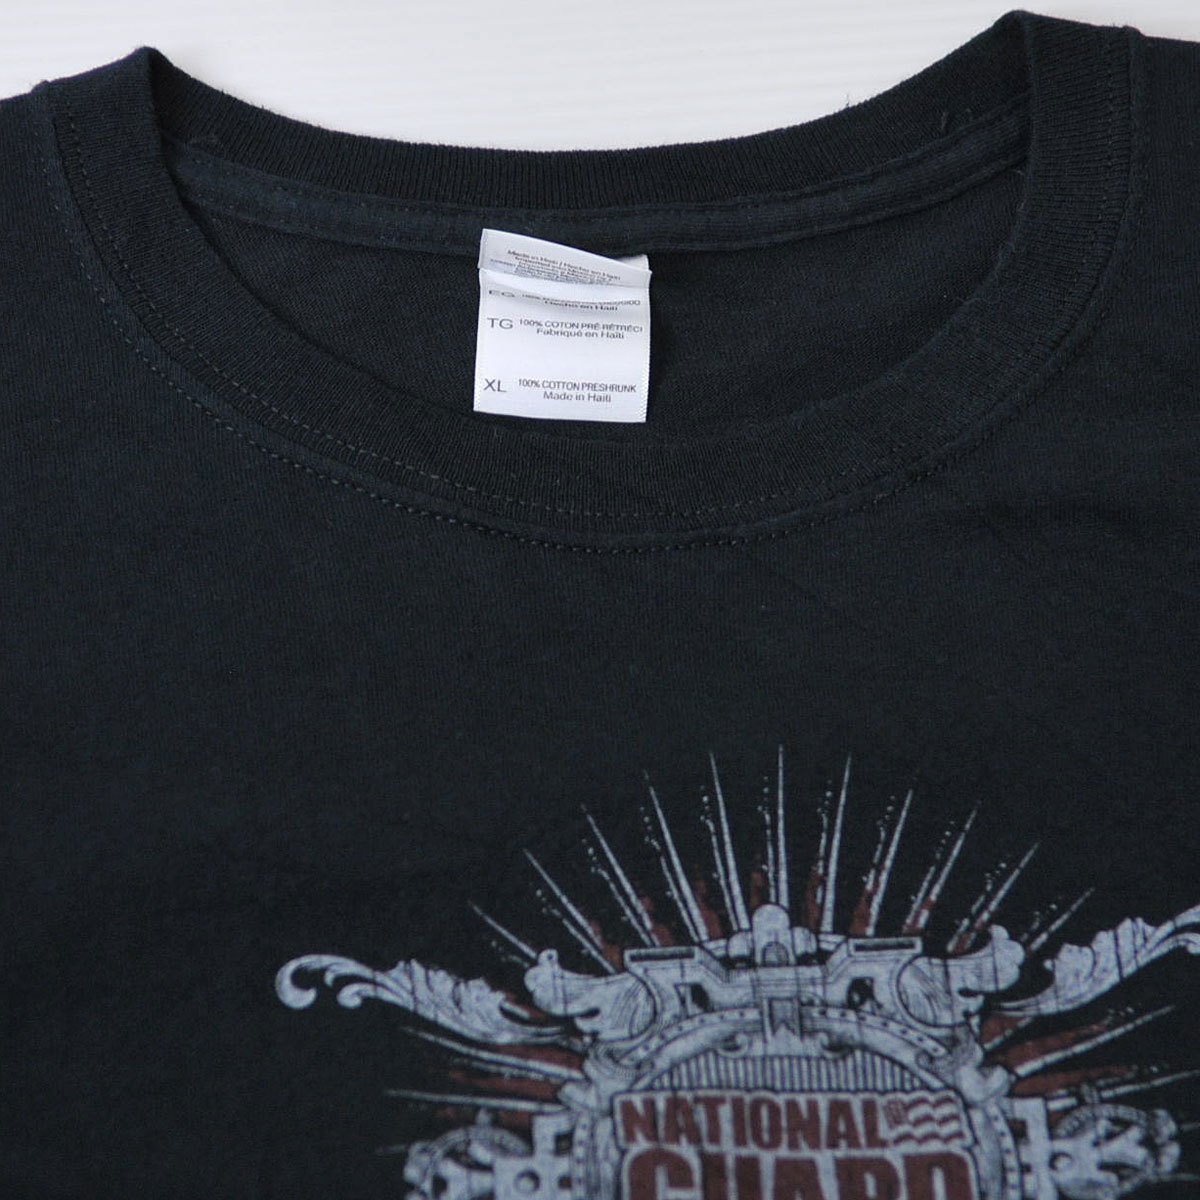  old clothes * american T-shirt National guard dot com XL xwp